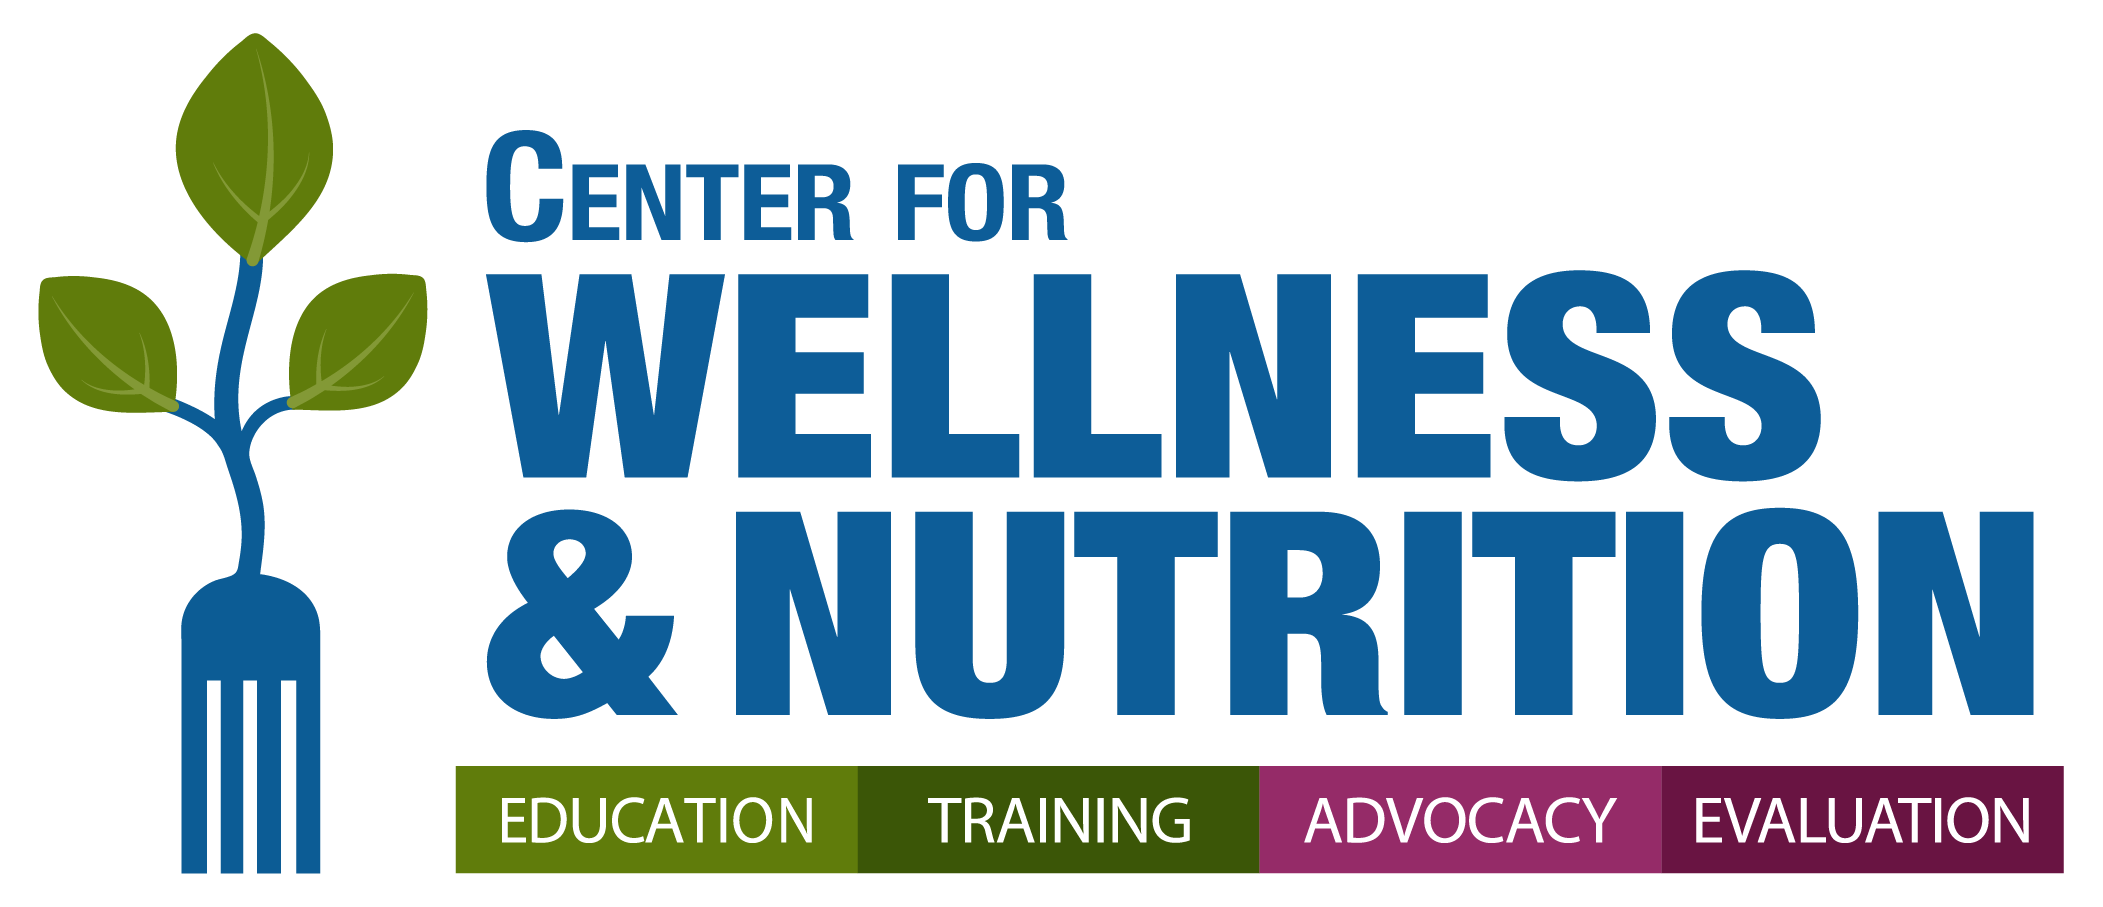 Center for Wellness & Nutrition